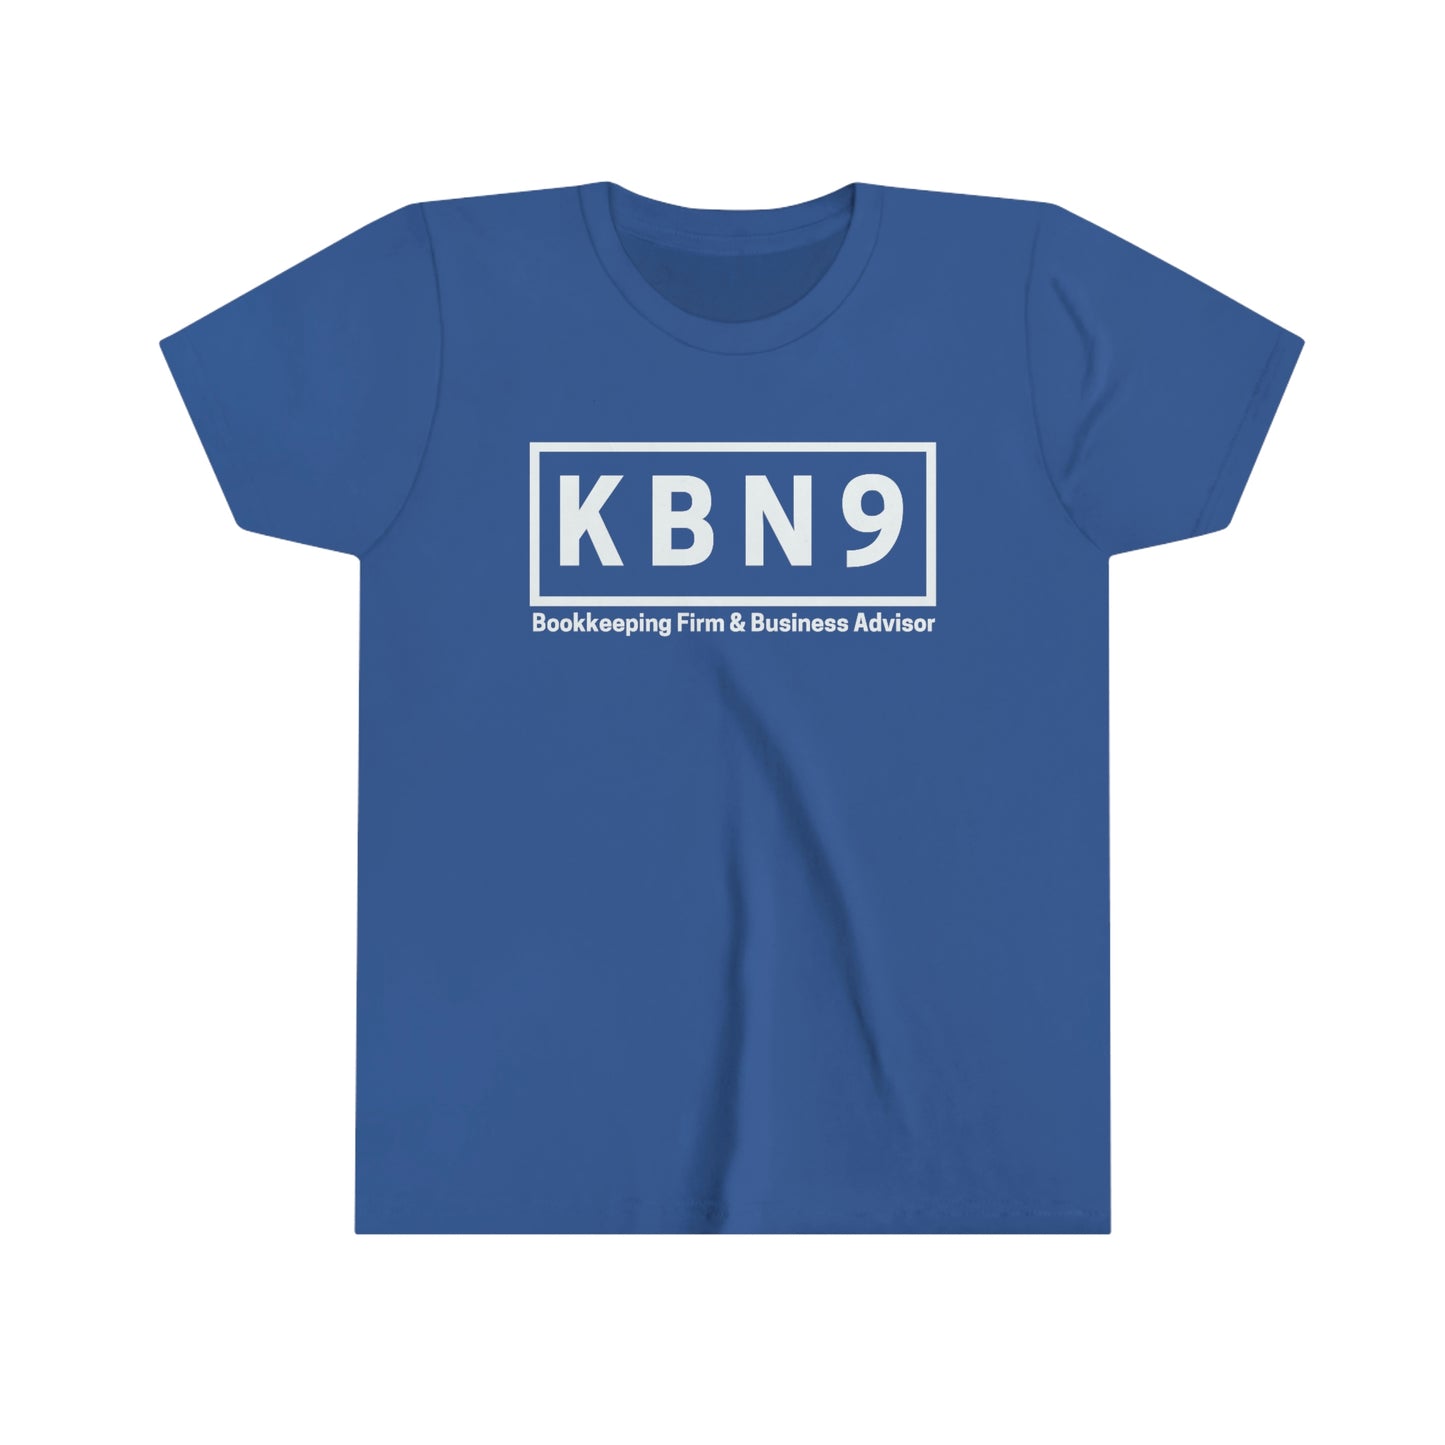 KBN9 - Youth Short Sleeve Tee